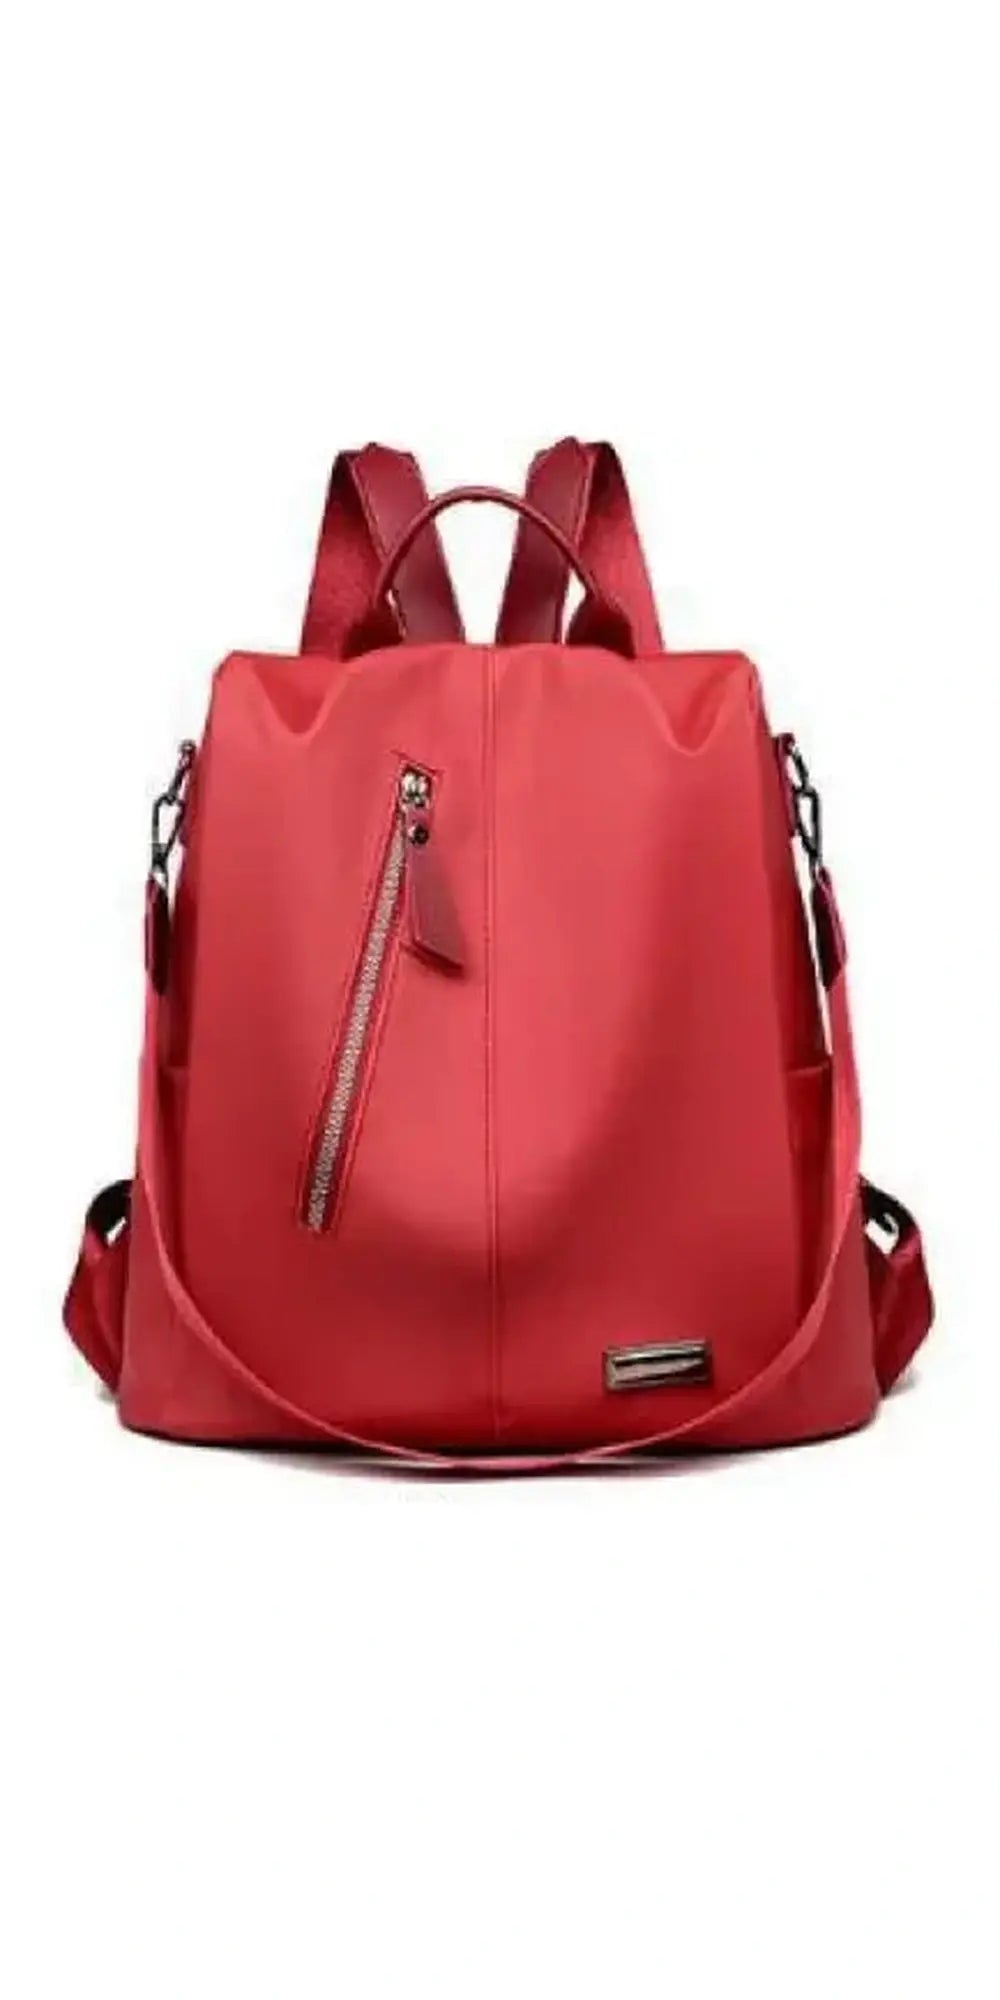 Oxford Cloth Backpack Nylon School Bag Women - Red - bags